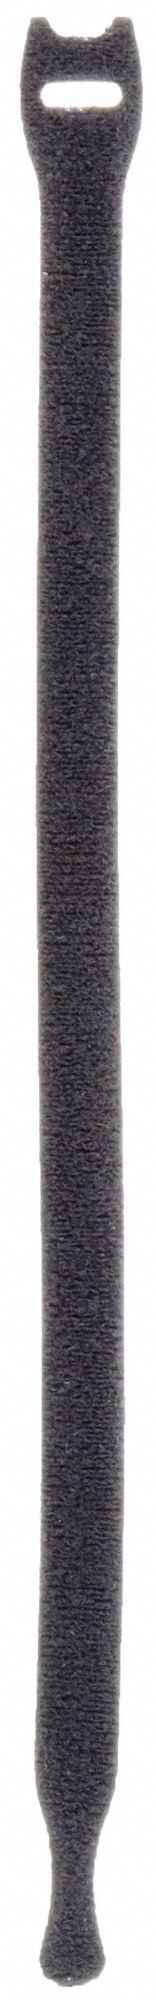 Velcro 170091, Perforated Straps W3/4 Black - PK45, 5JLF1